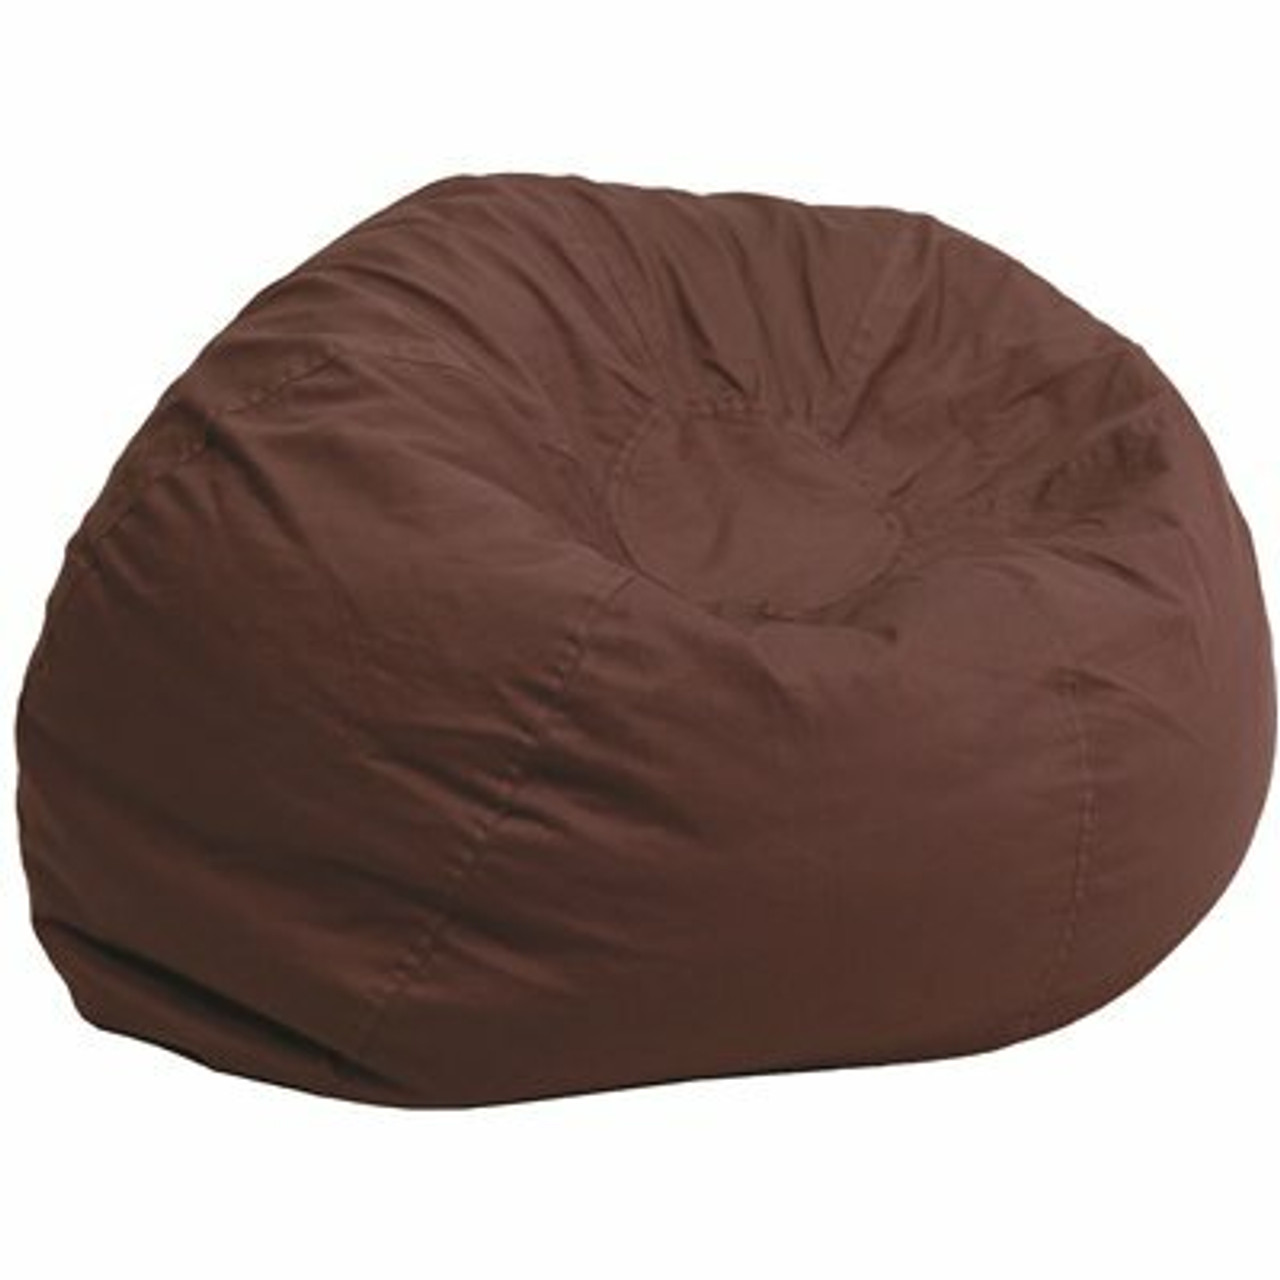 Flash Furniture Small Solid Brown Kids Bean Bag Chair